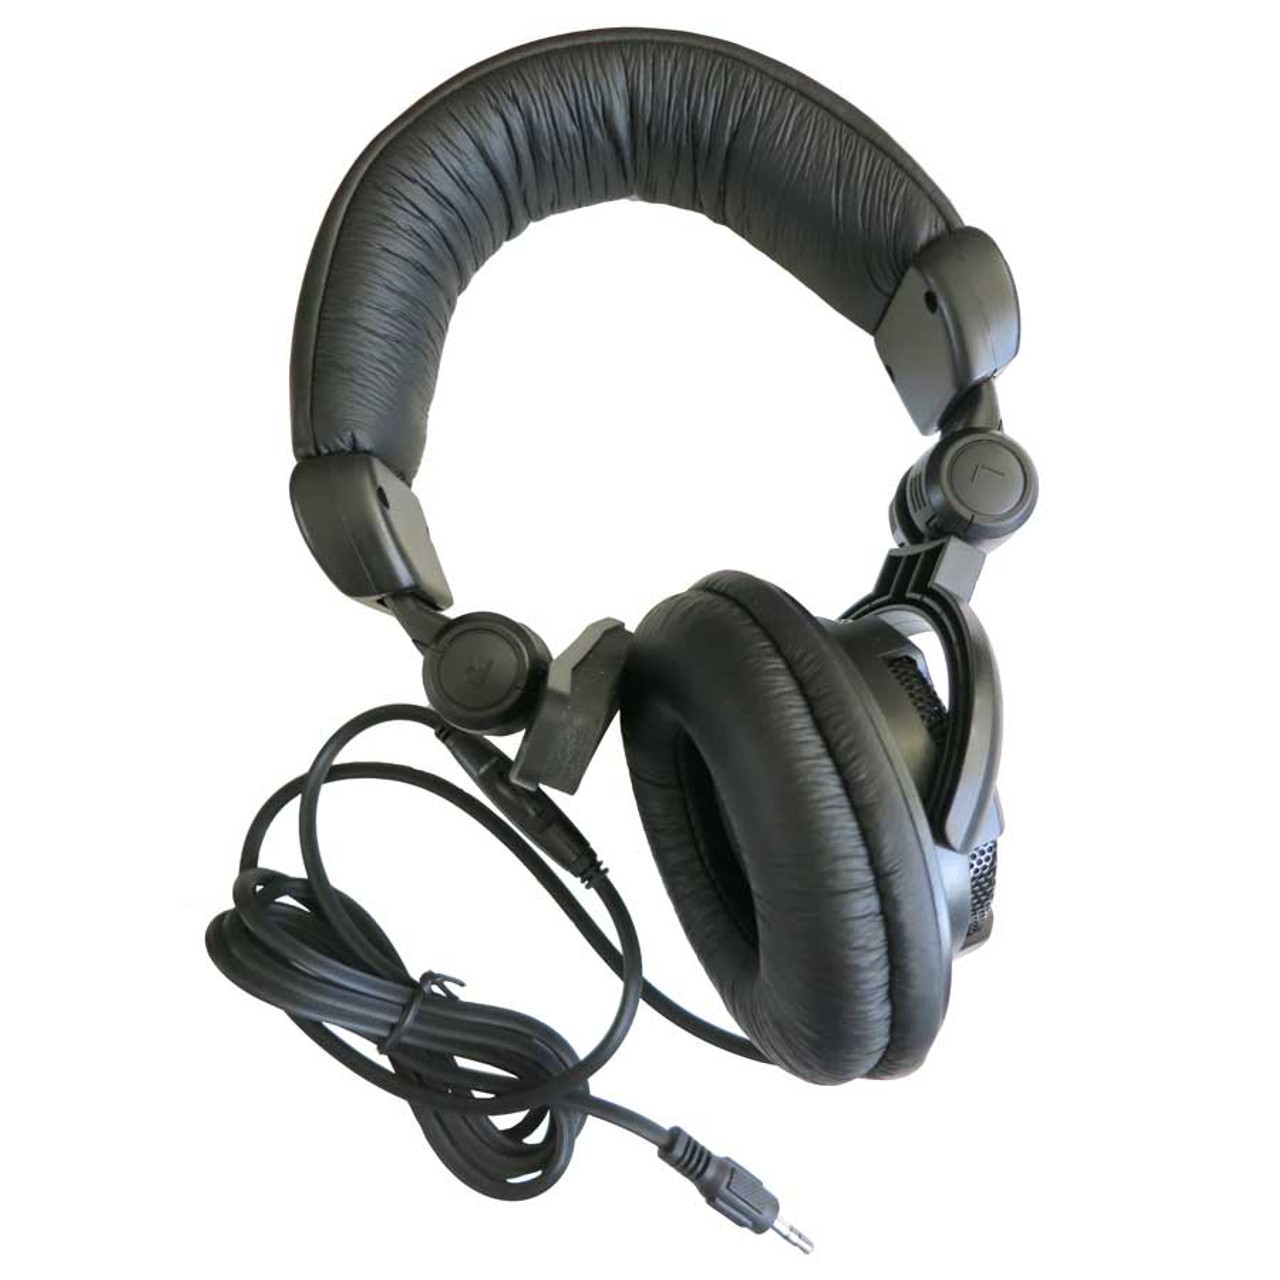 YTH-310S I DJ Headphones with one ear cup